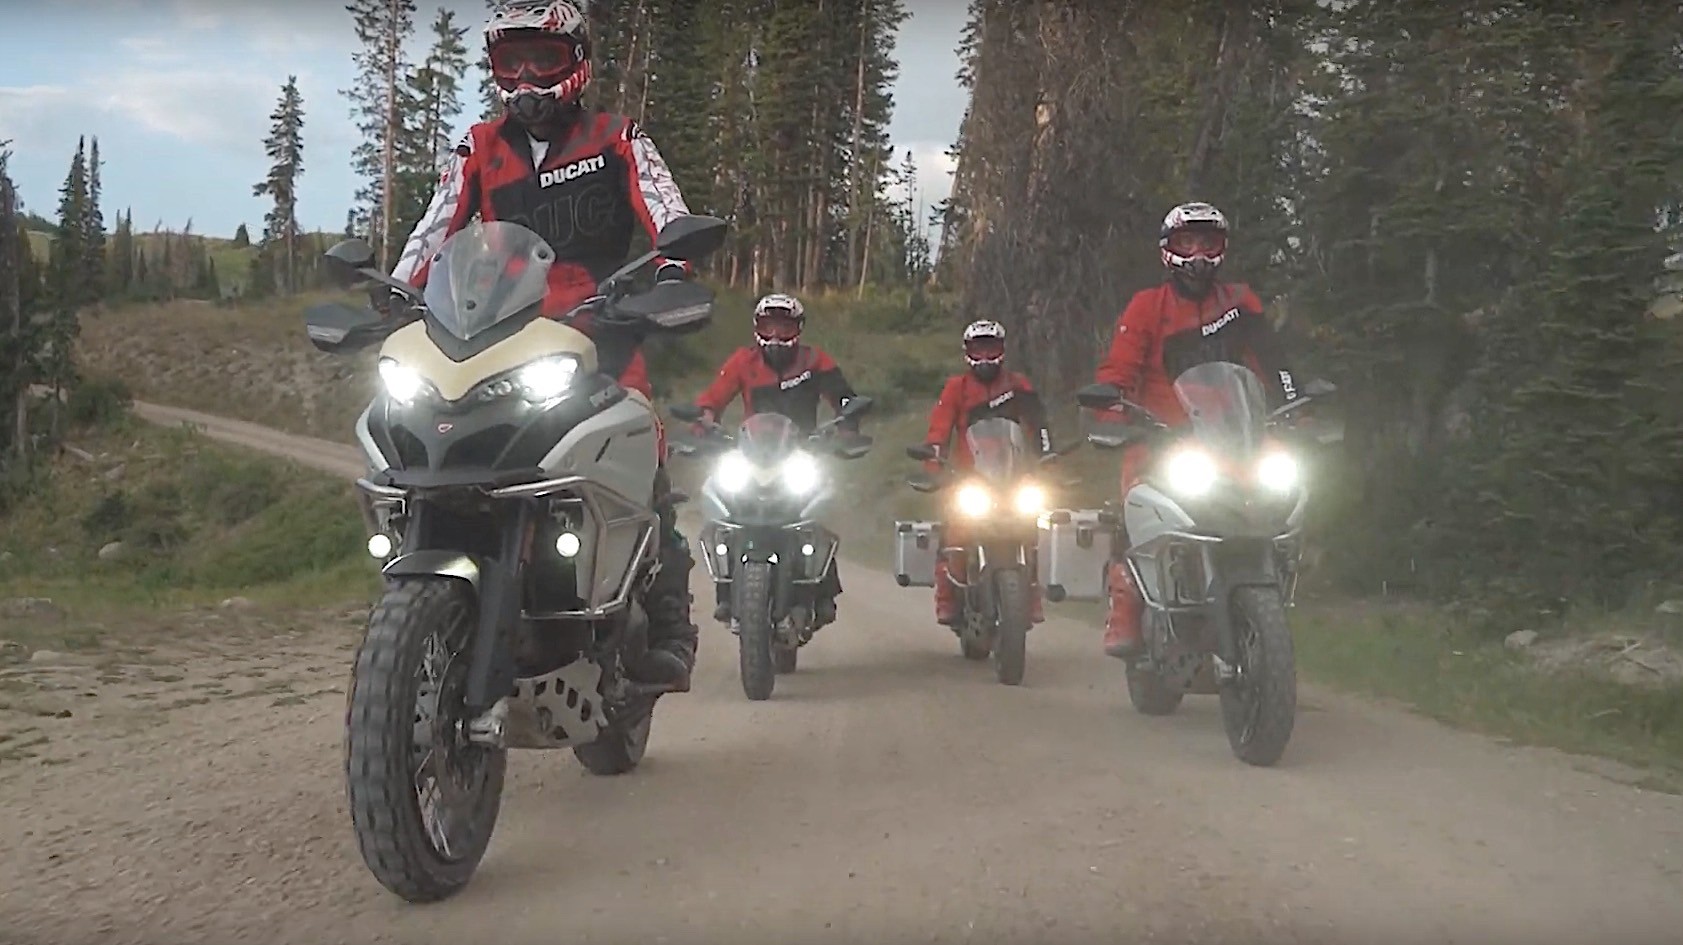 Ducati Enduro Training Program to Launch in the U.S. in June ...